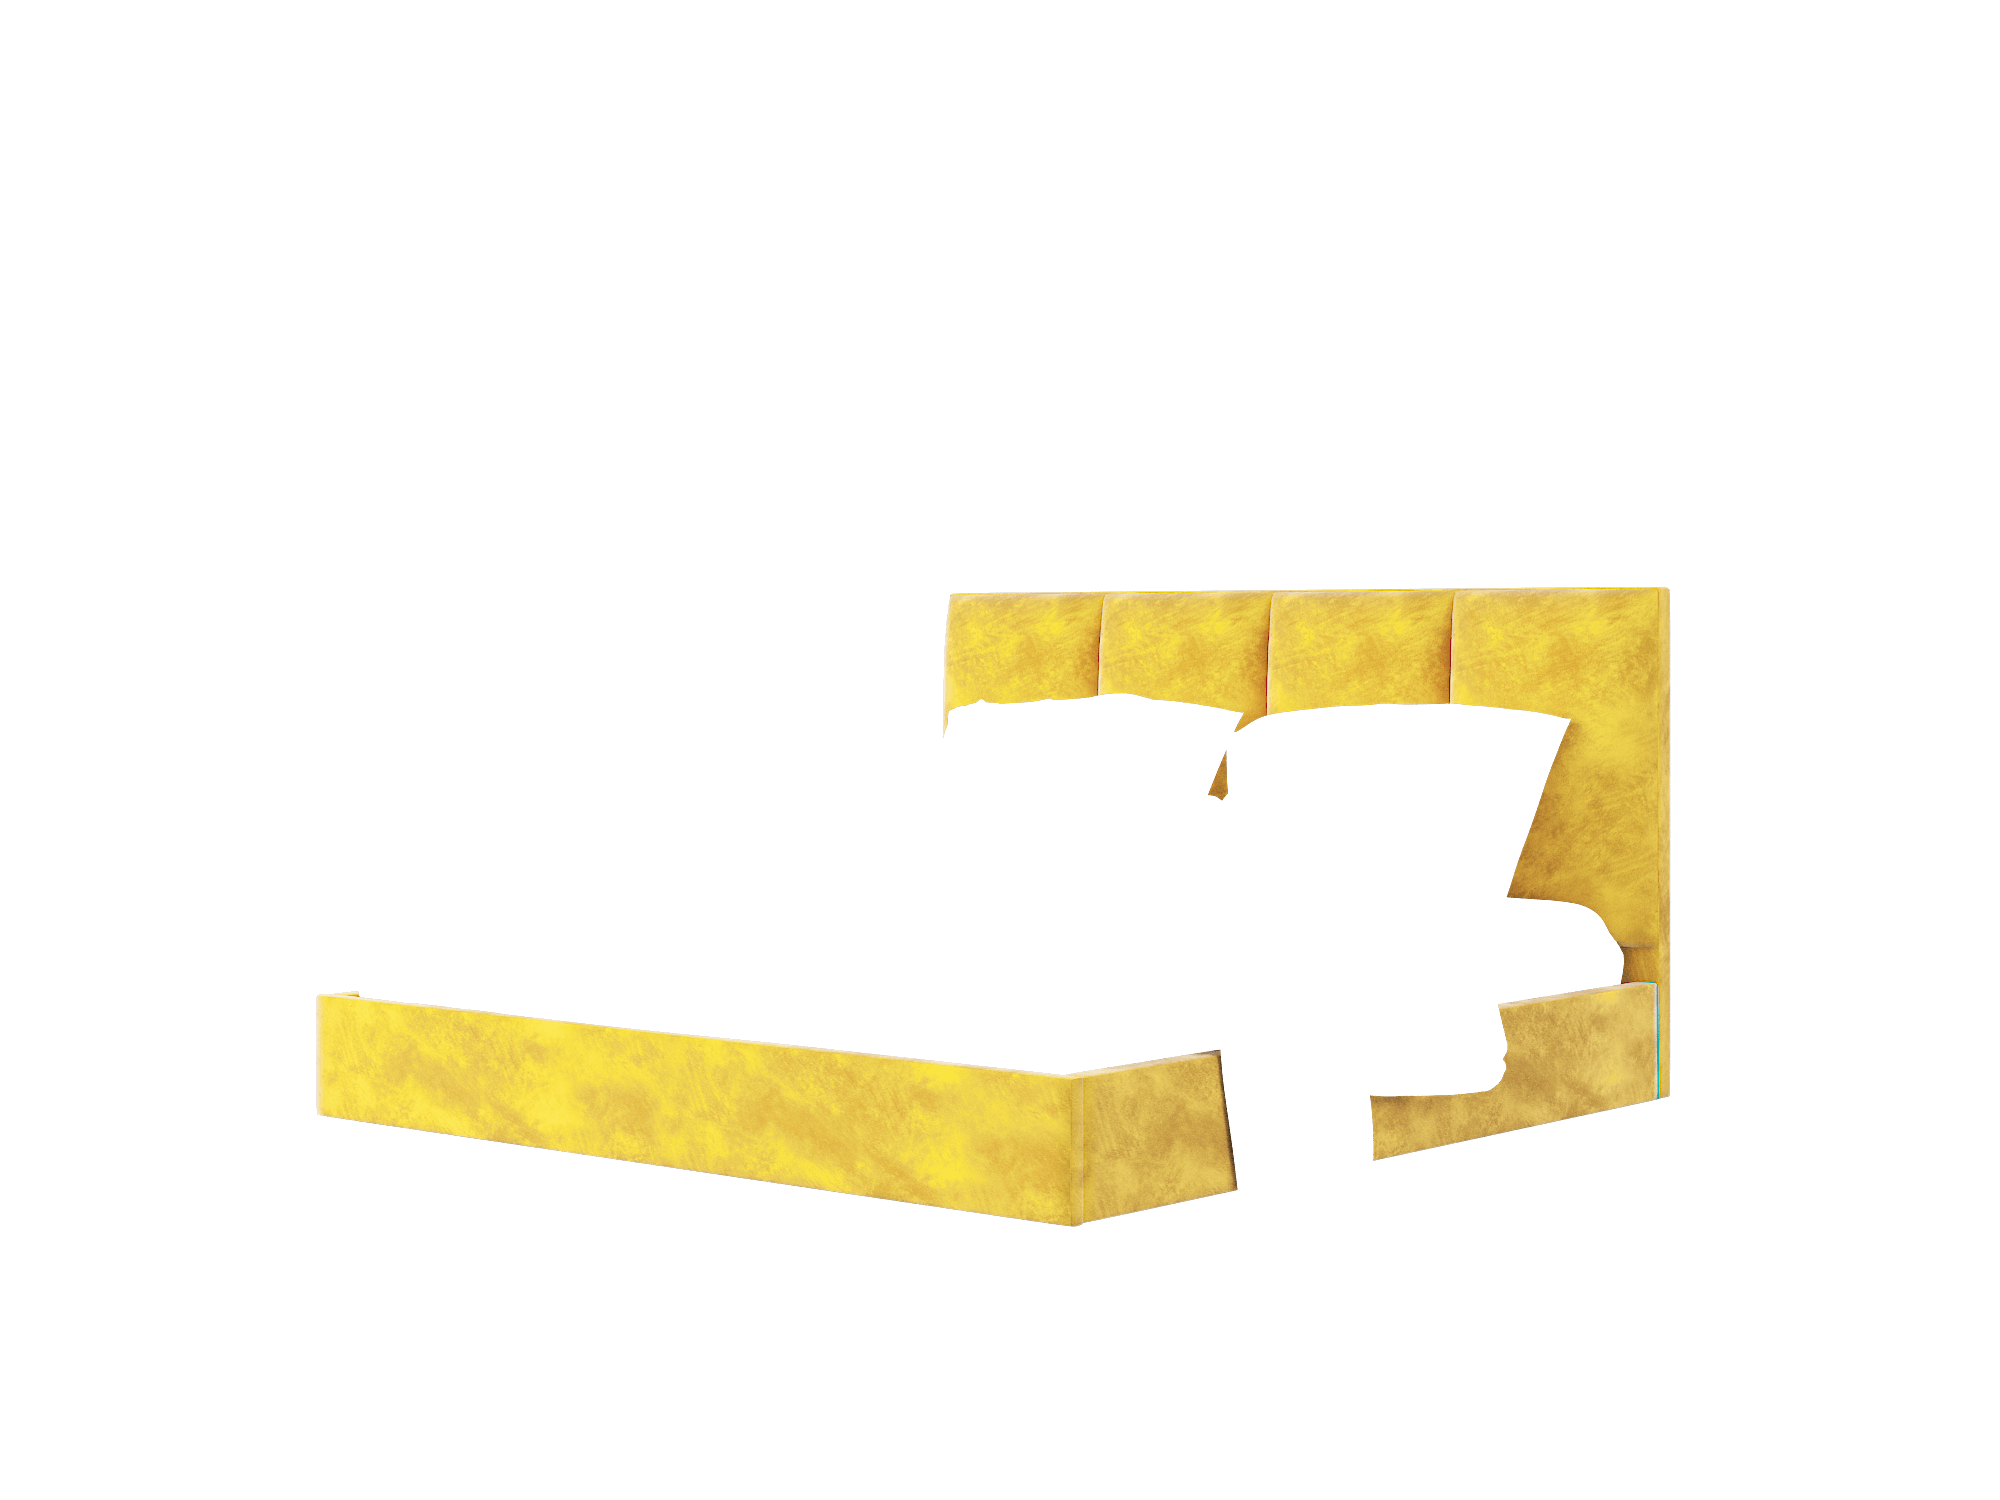 Celine Royale Marigold Bed King Room Texture